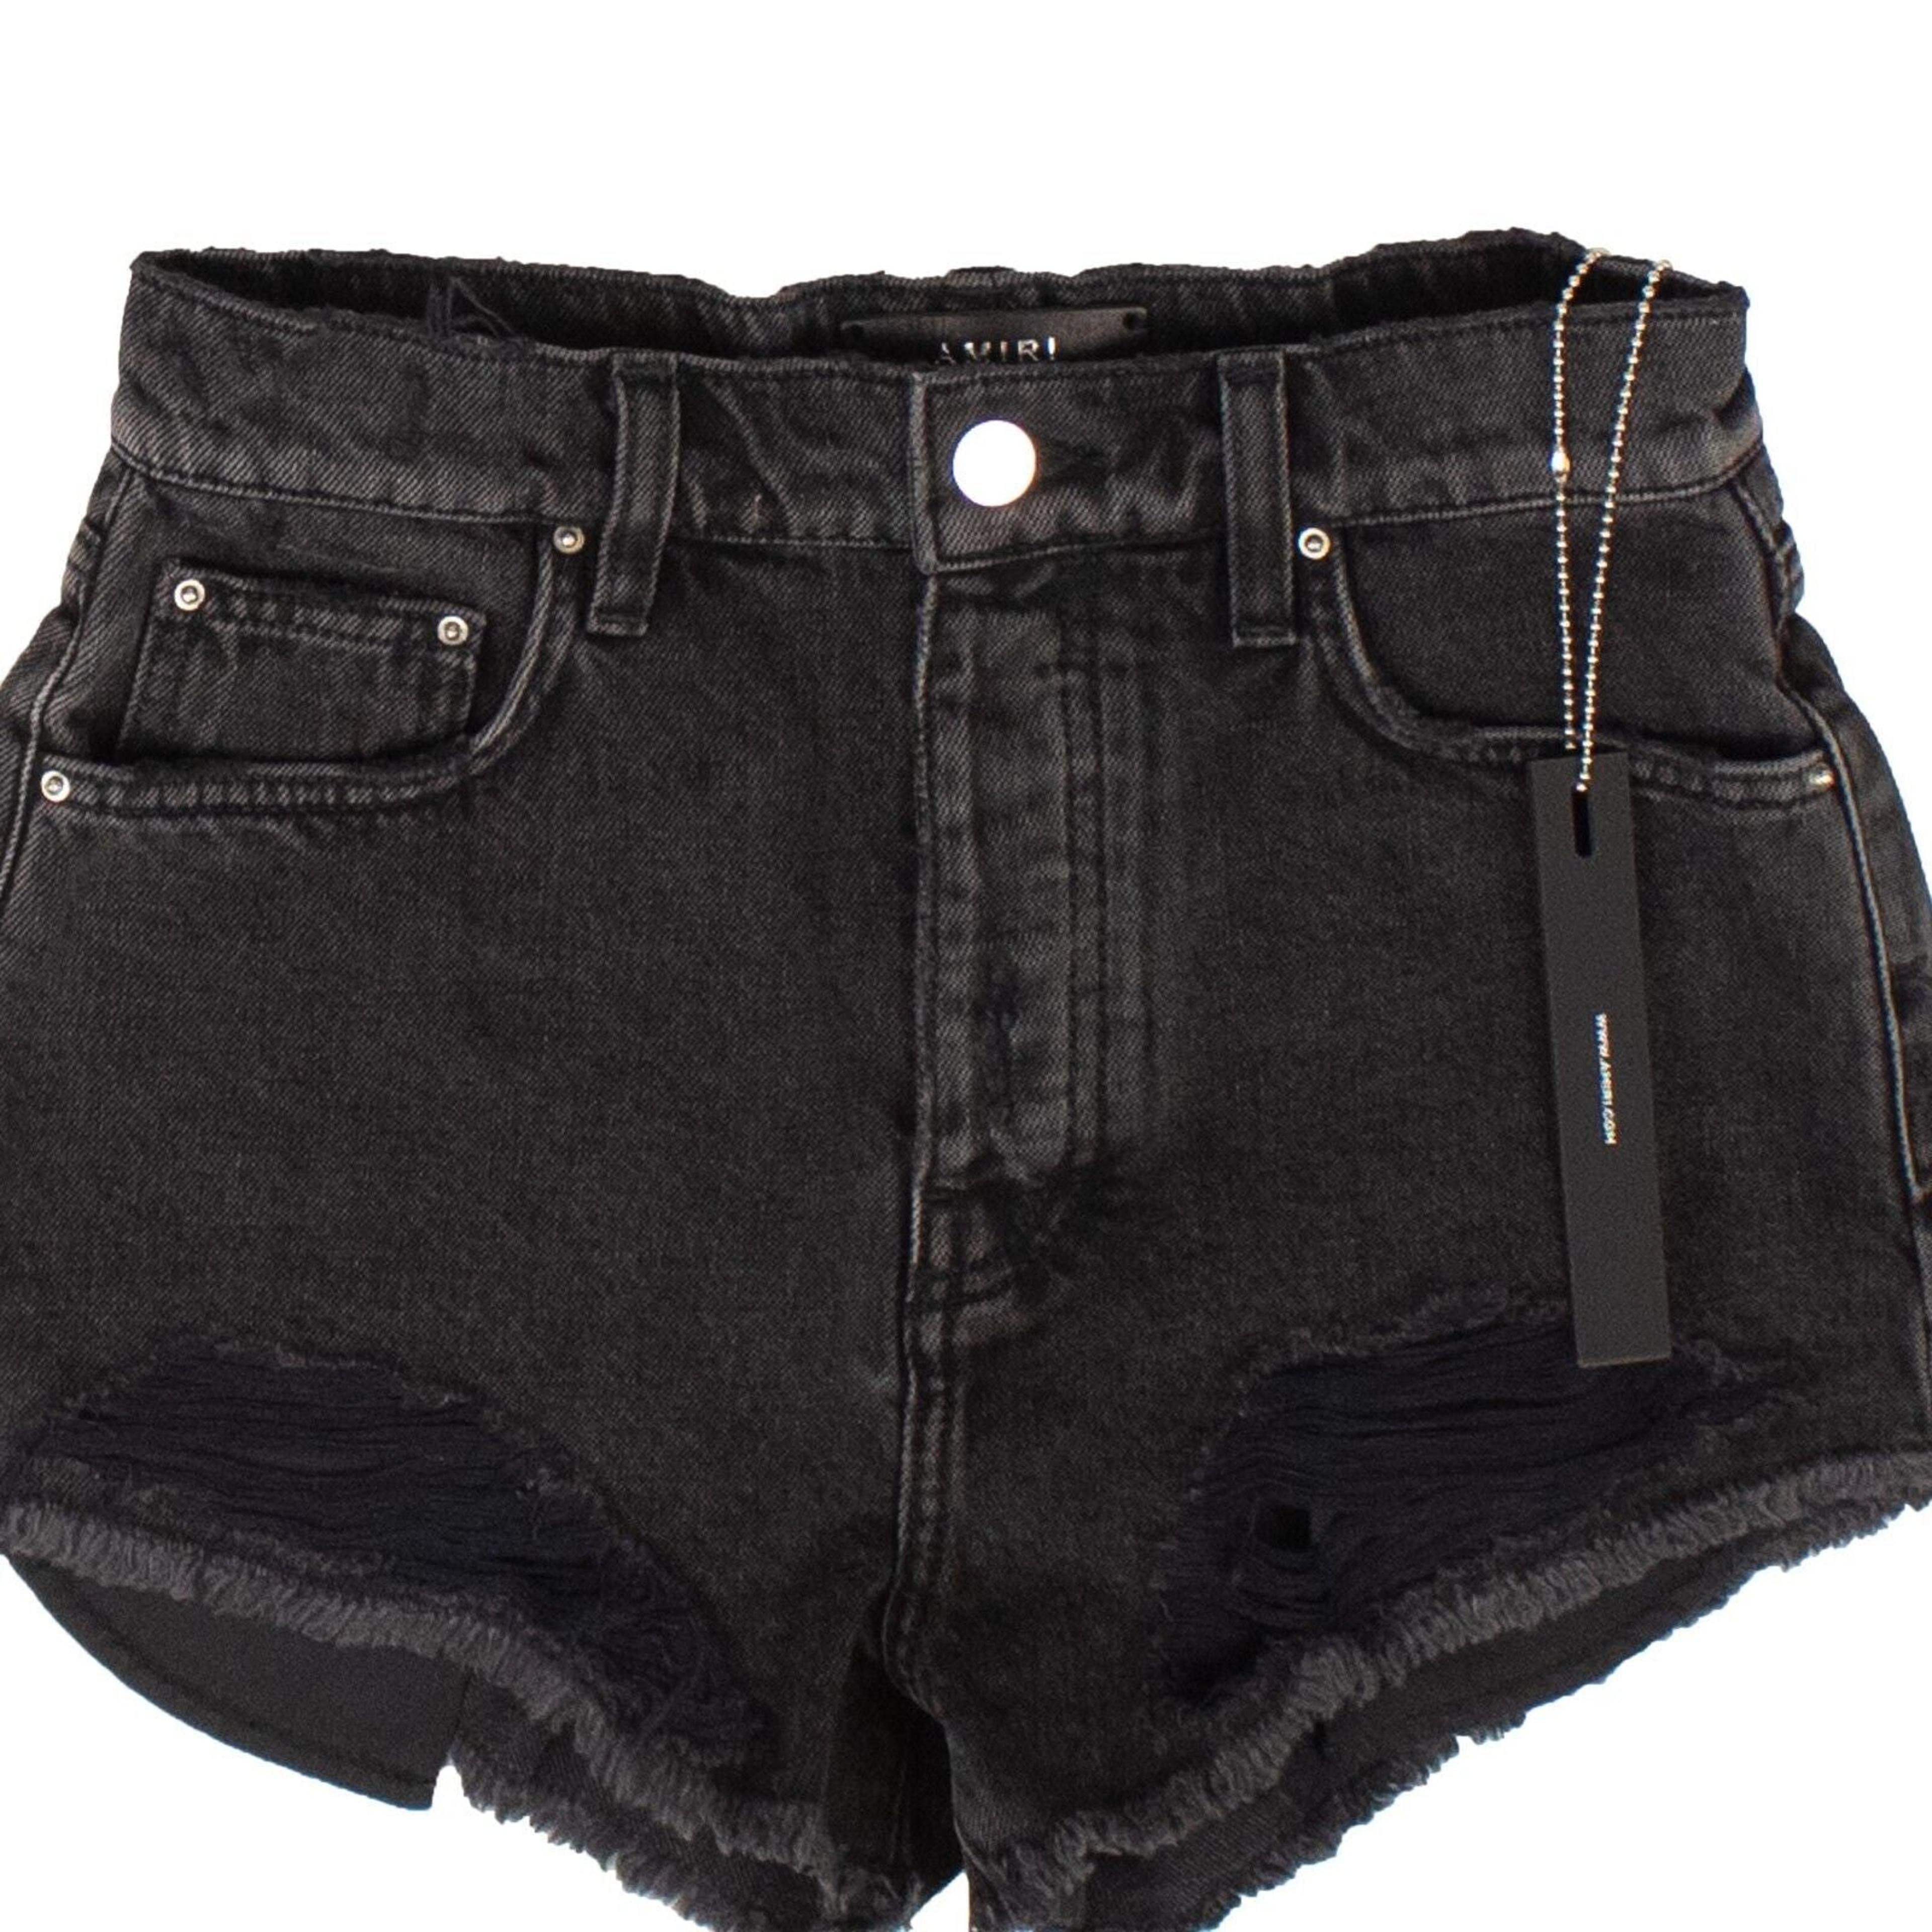 Alternate View 2 of Black Hot Pants Thrasher Shorts